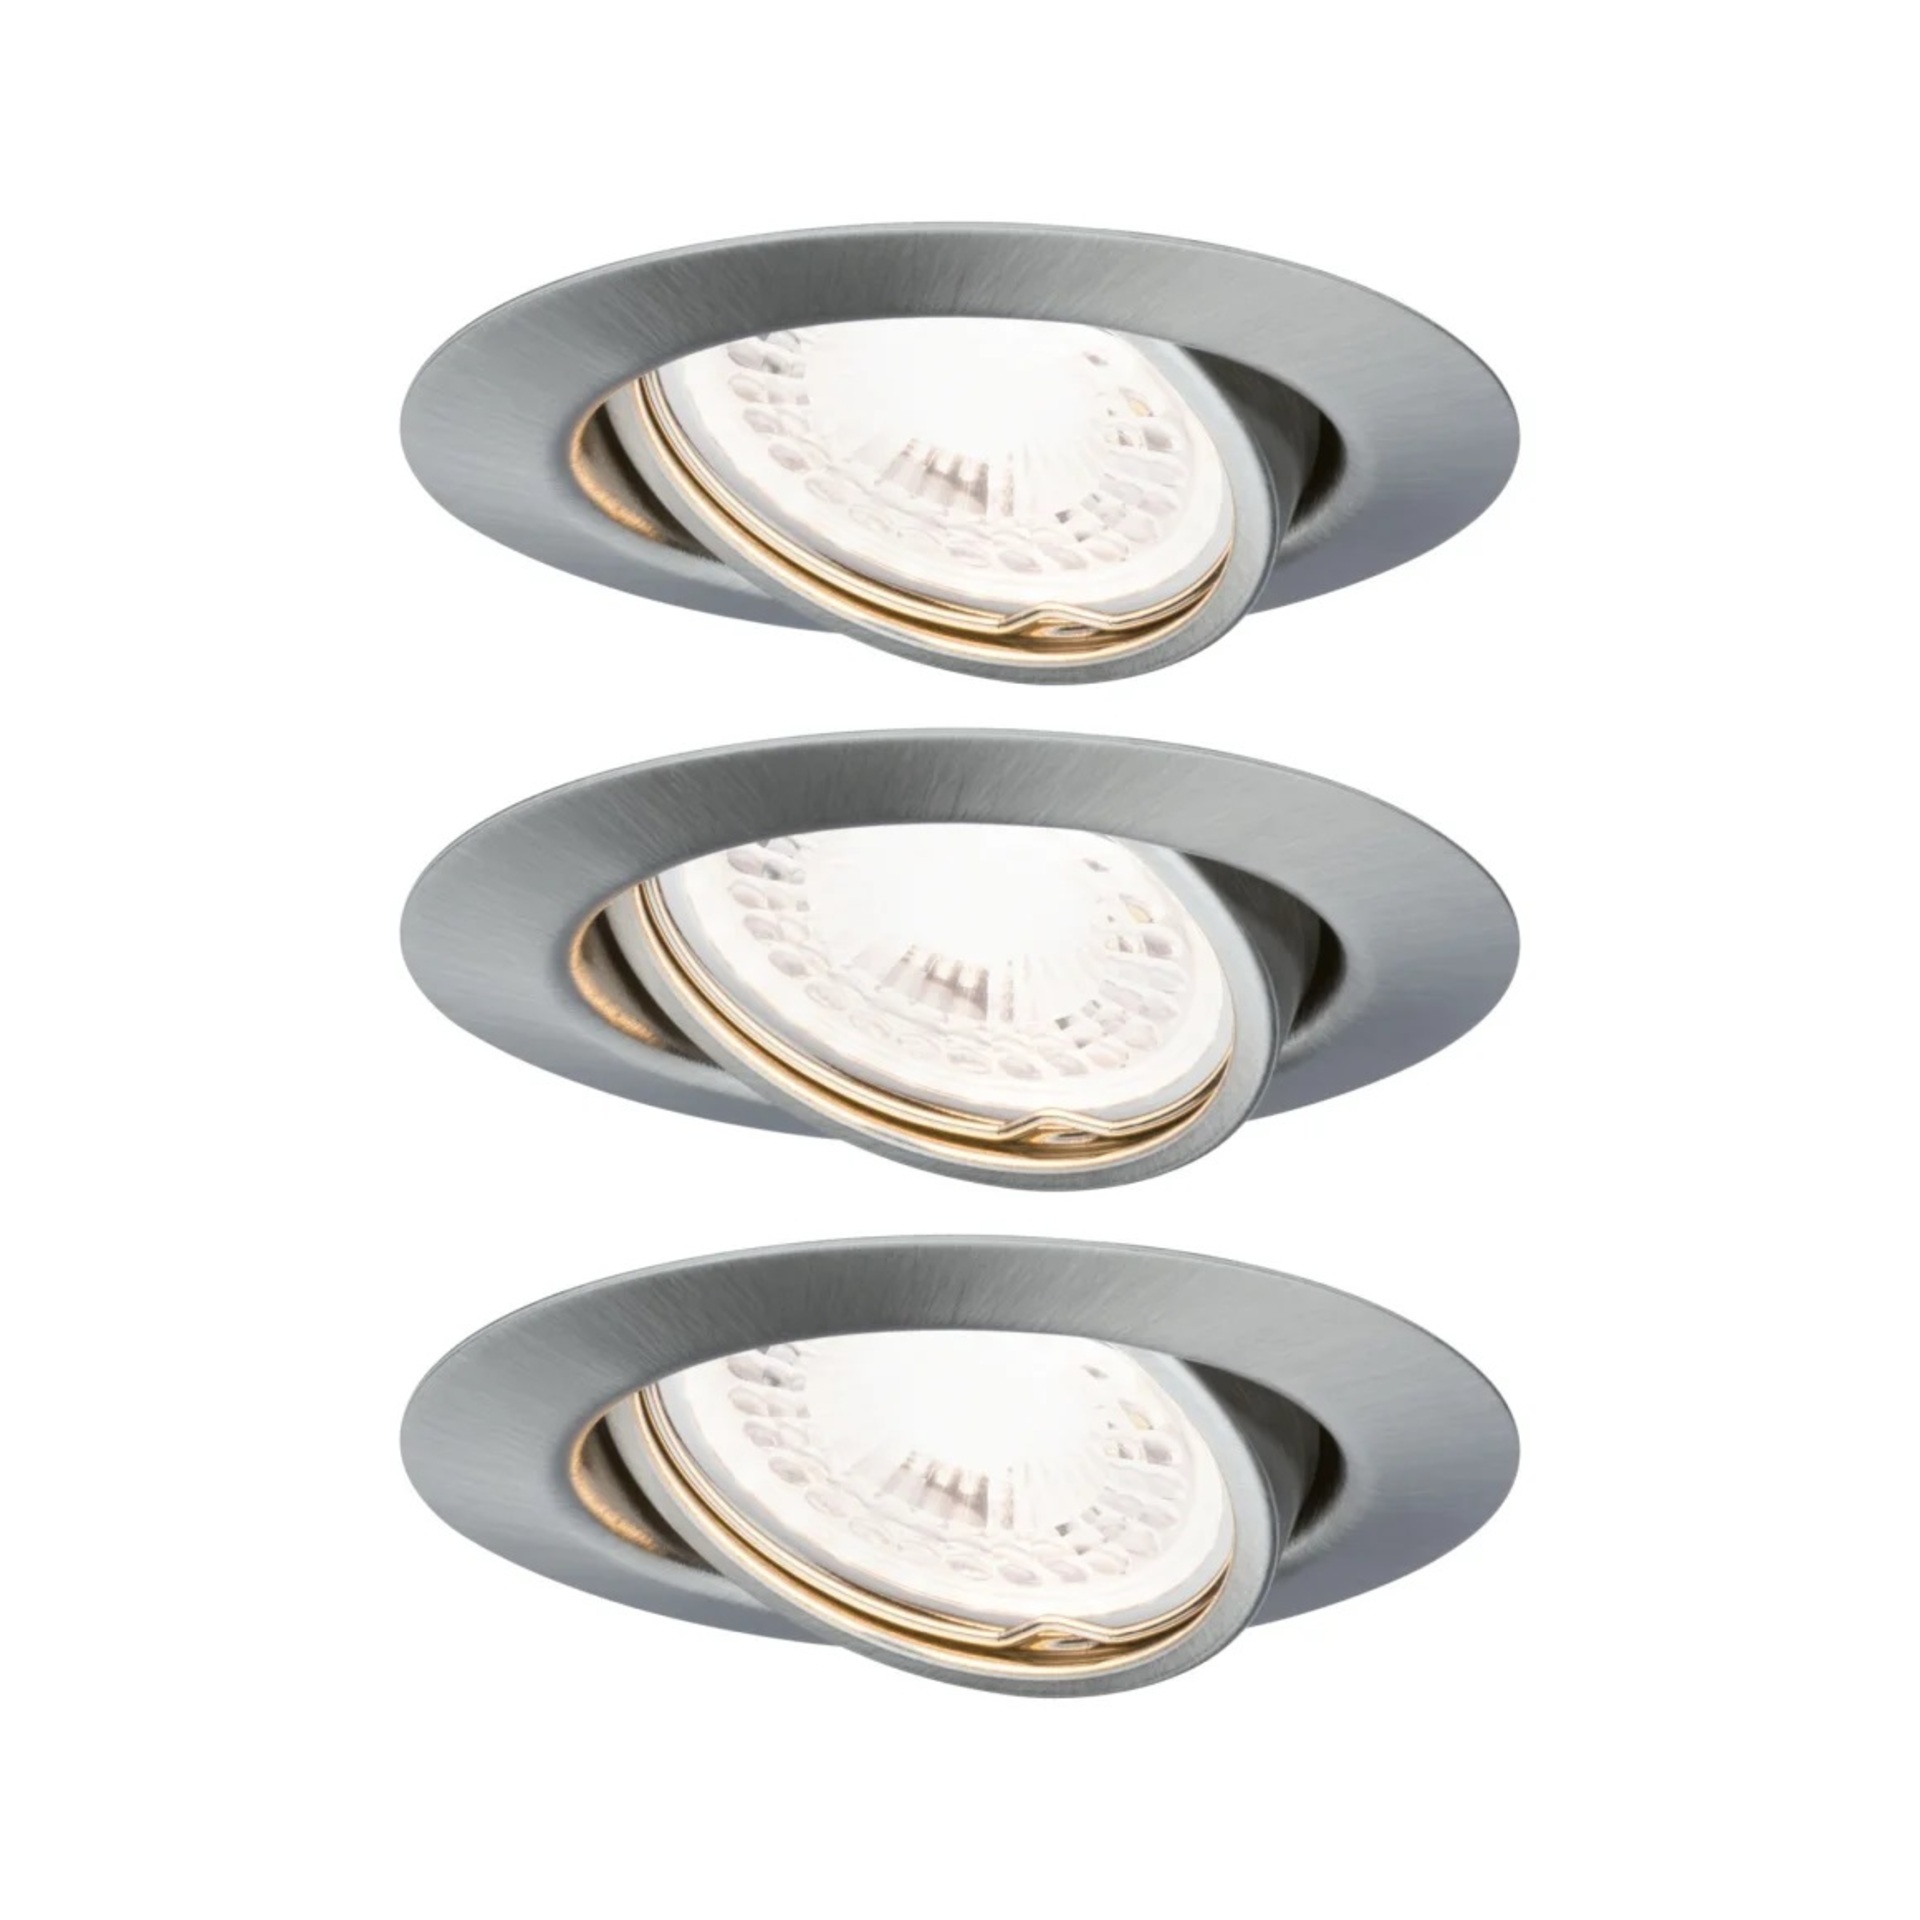 PAULMANN Vestavné svítidlo LED Base kruhové 3x5W GU10 kov kartáčovaný výklopné 3-krokové-stmívatelné 934.24 P 93424